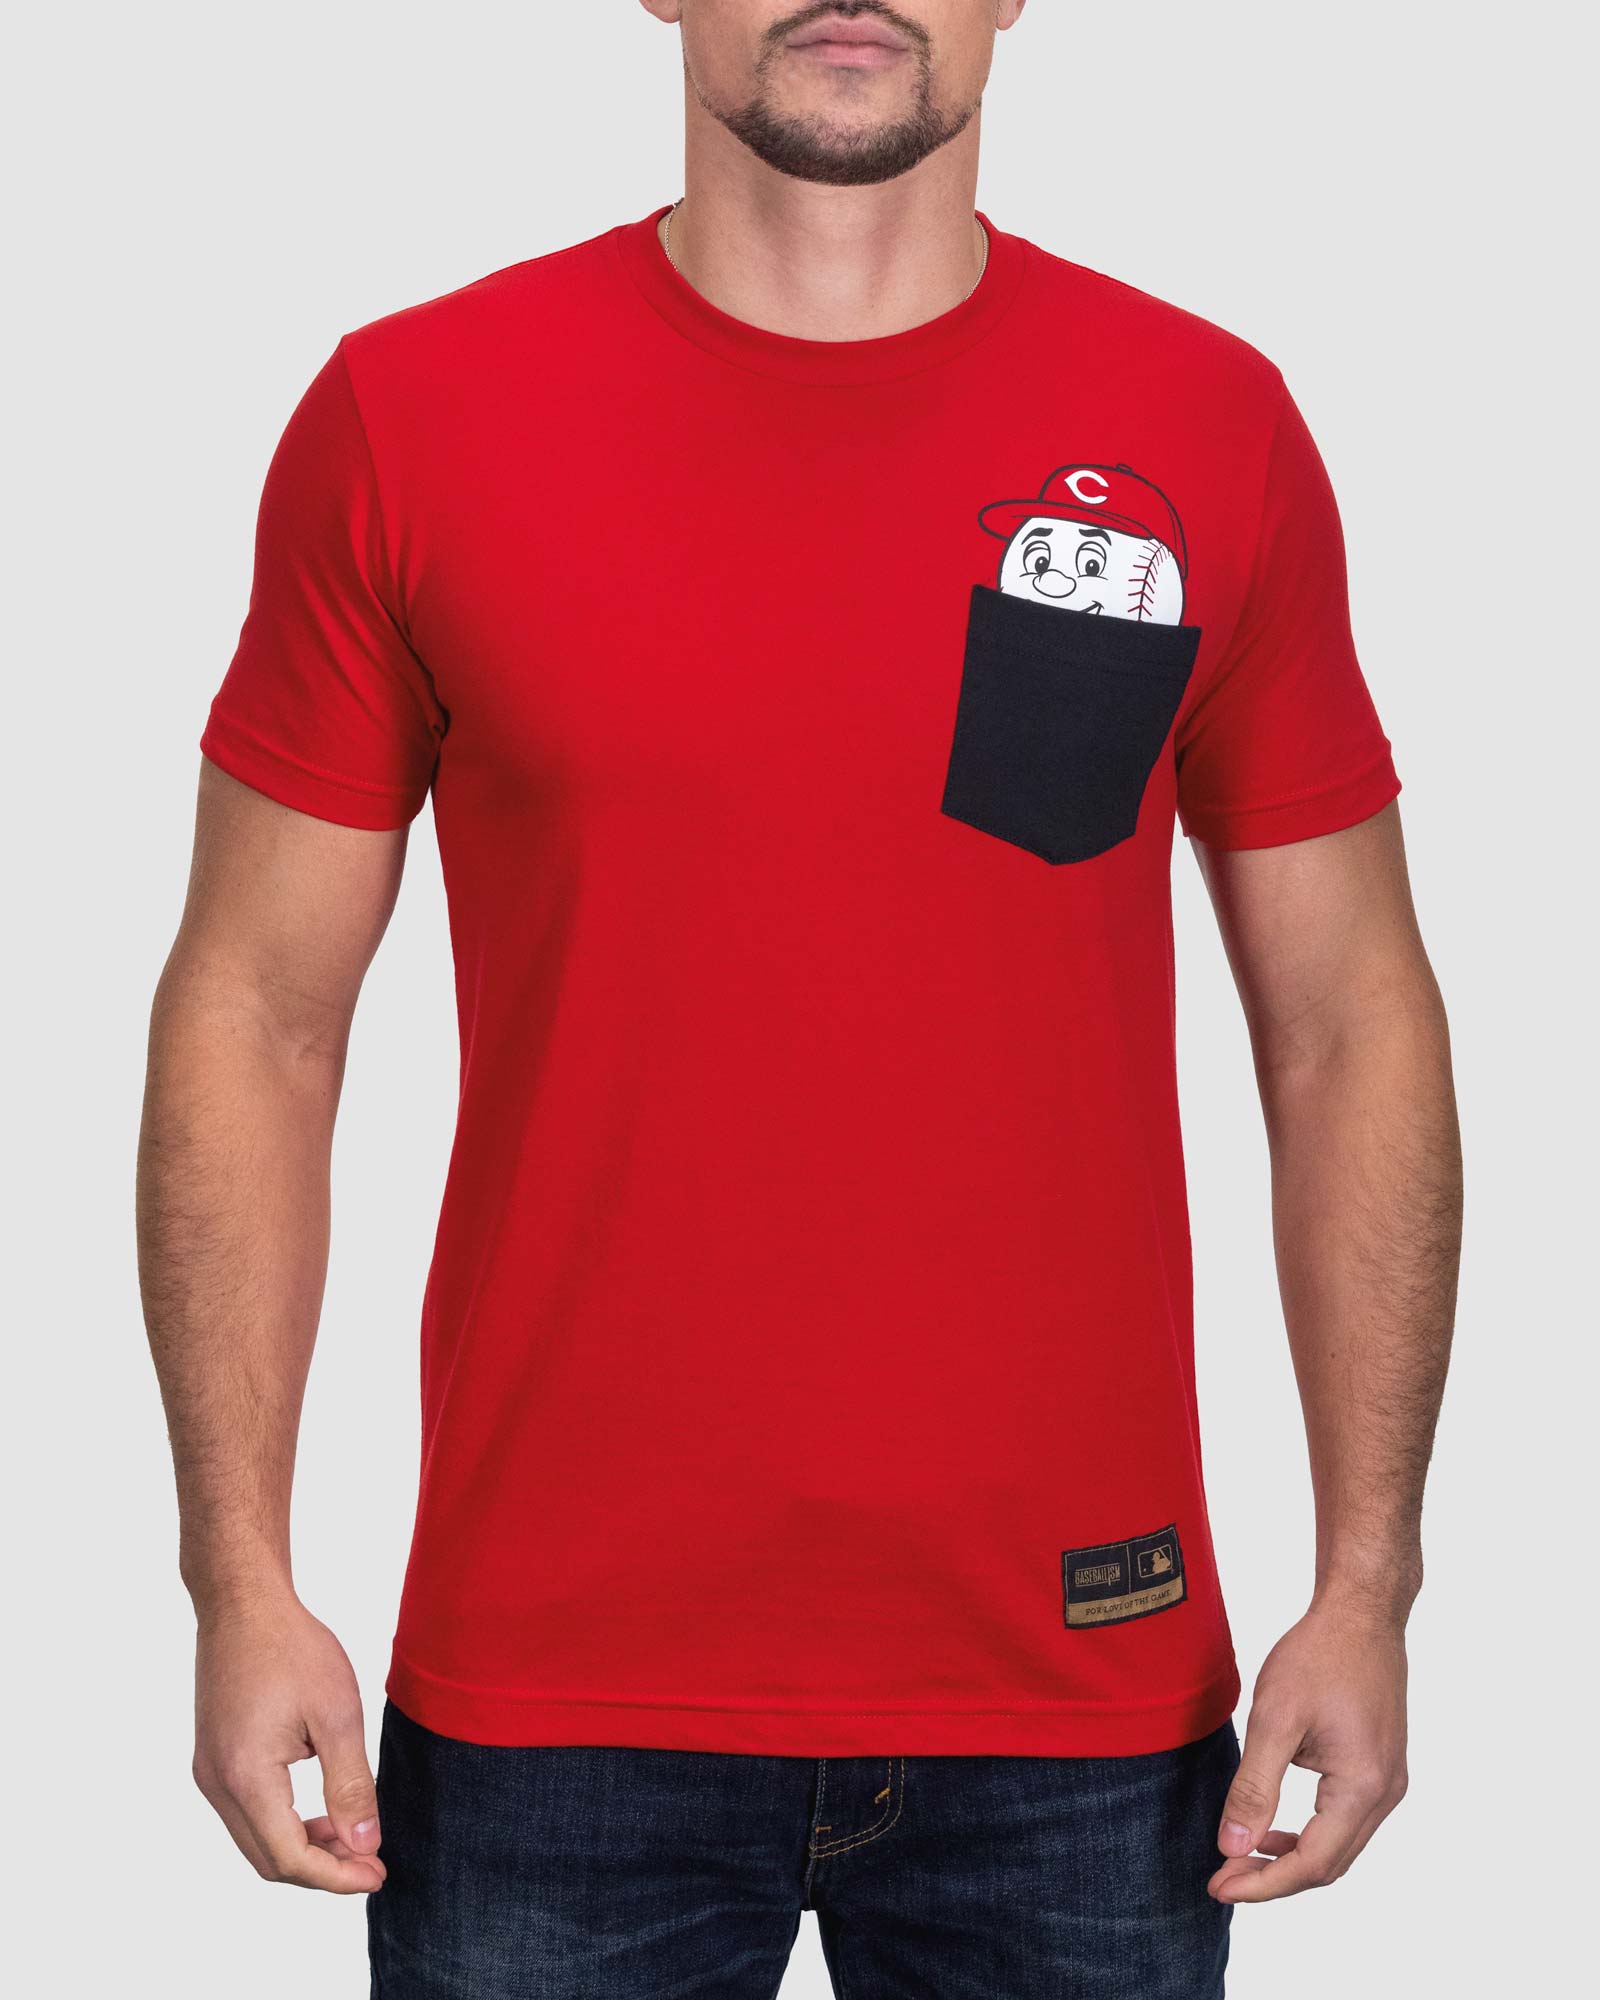 Cincinnati Reds Infant Mascot shirt - Kingteeshop